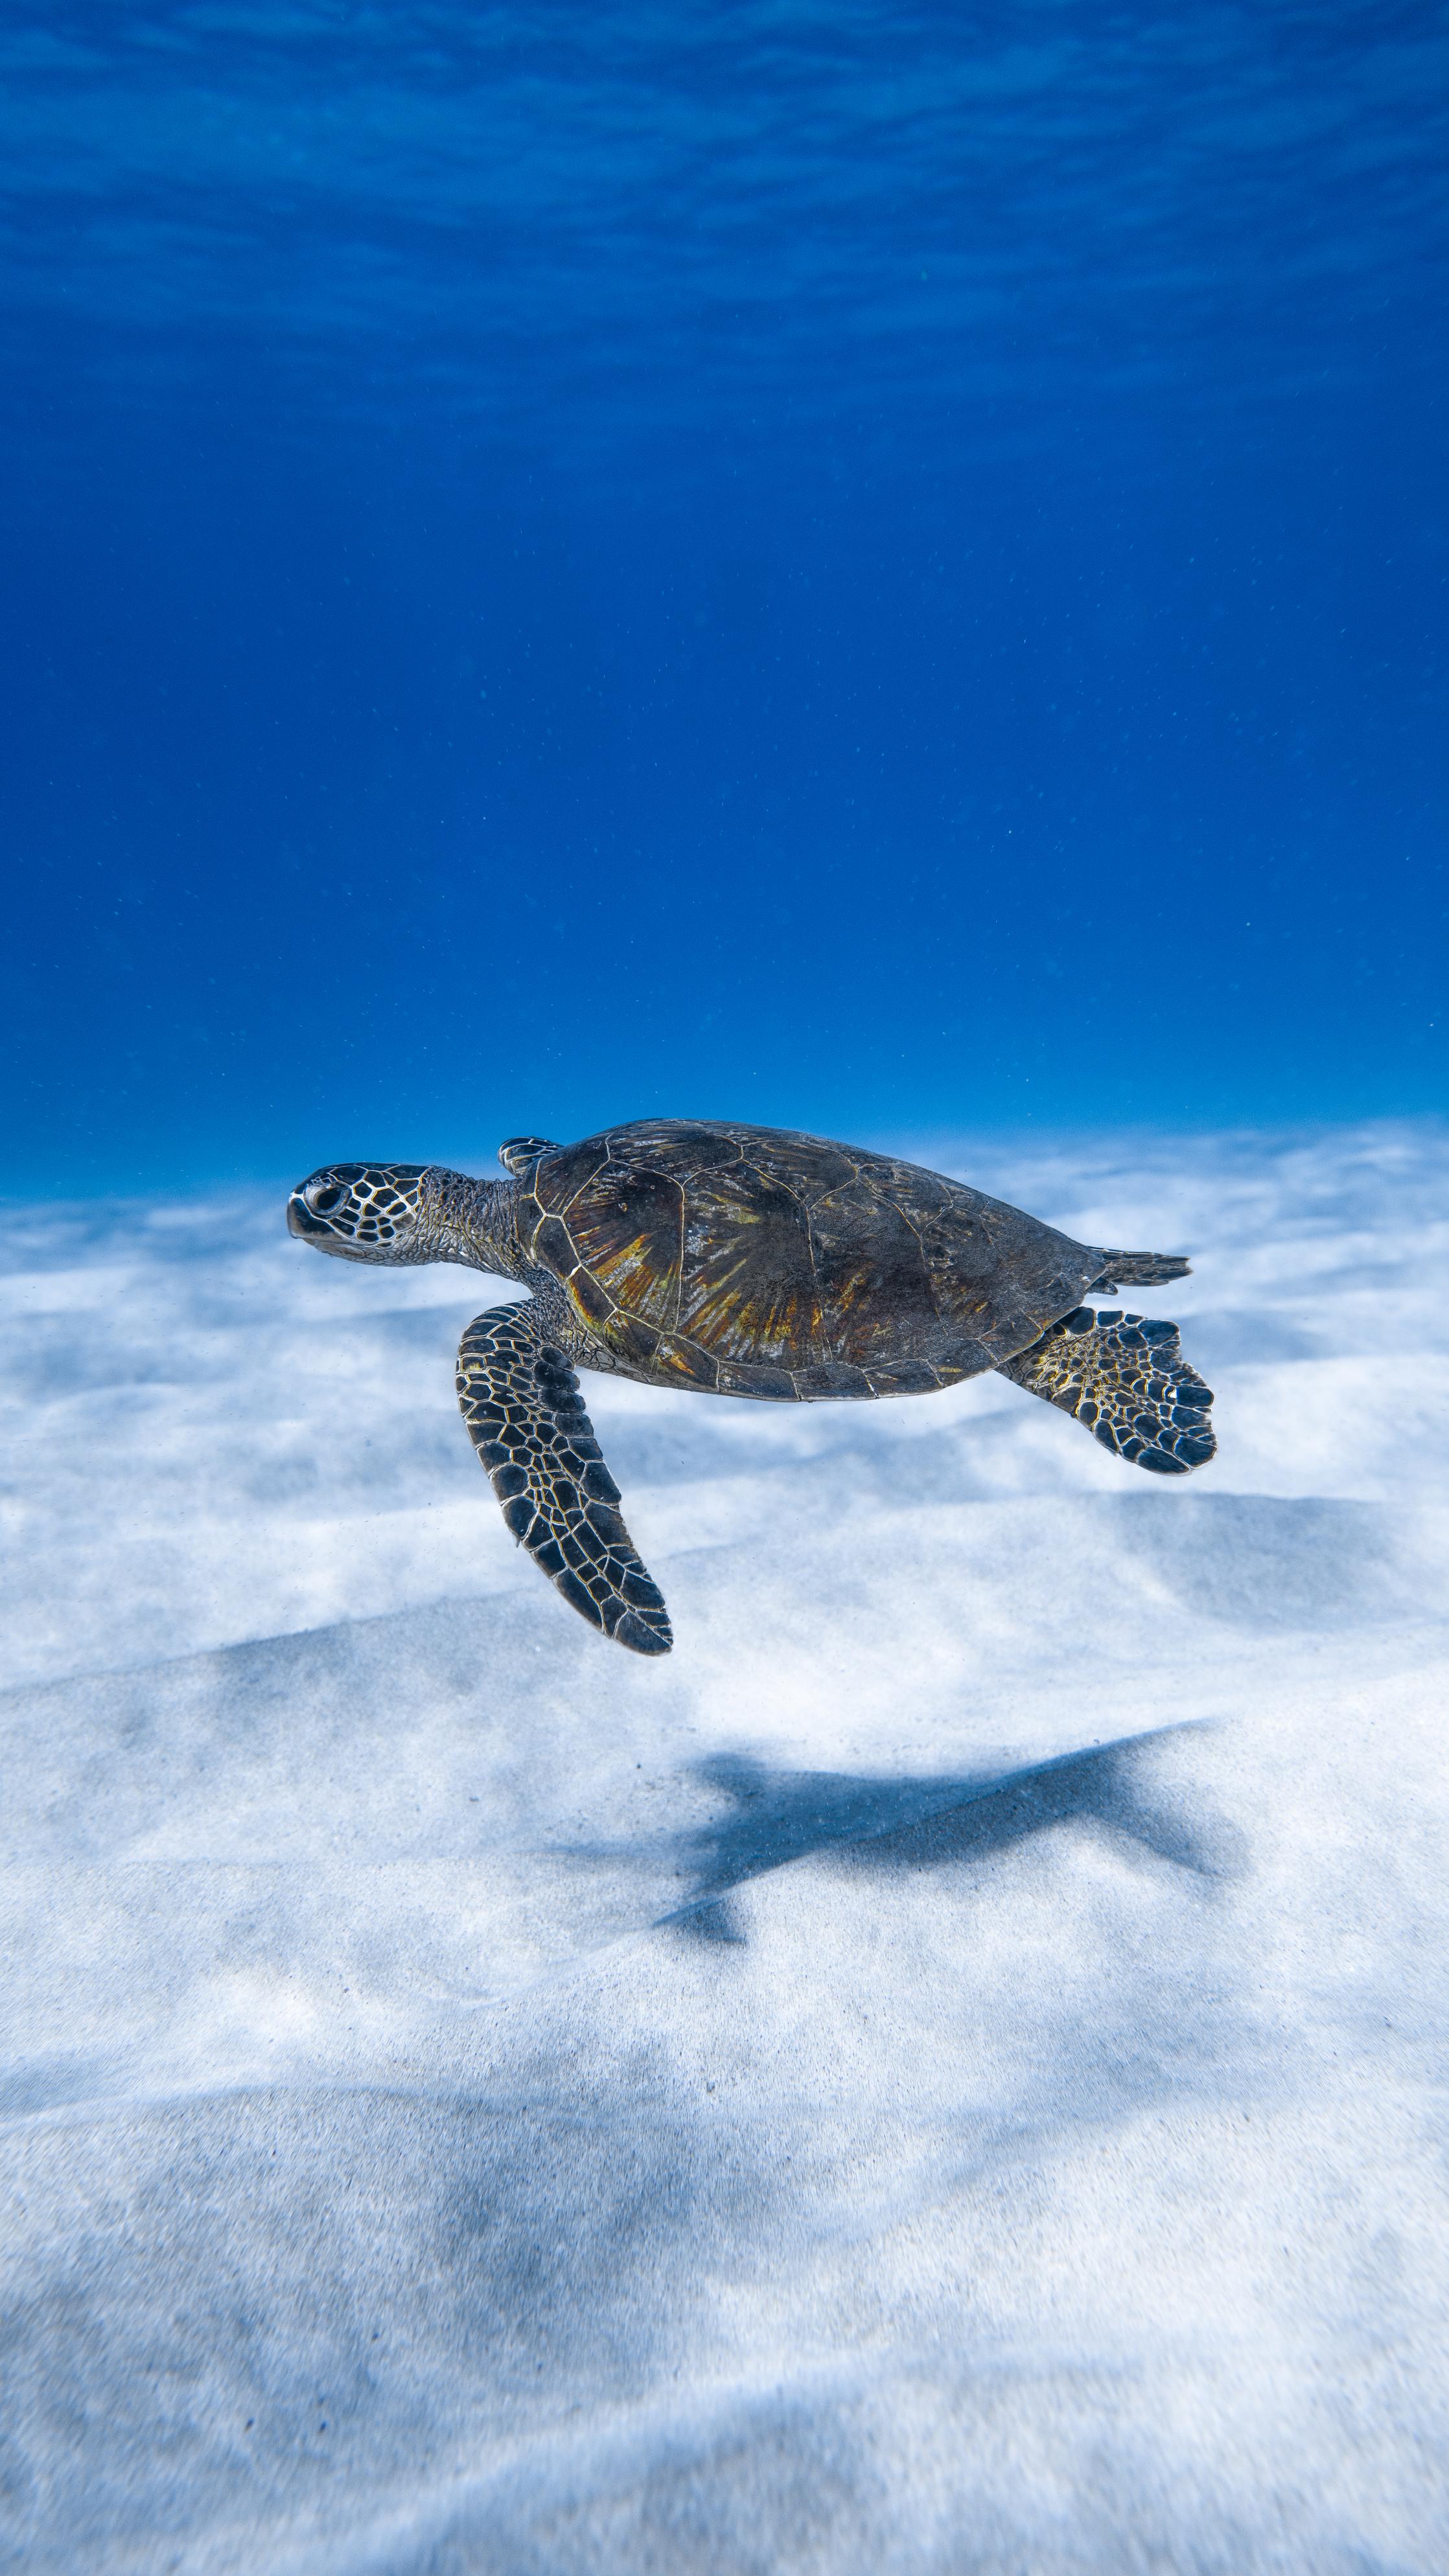 Turtle habitats: keeping your turtle warm